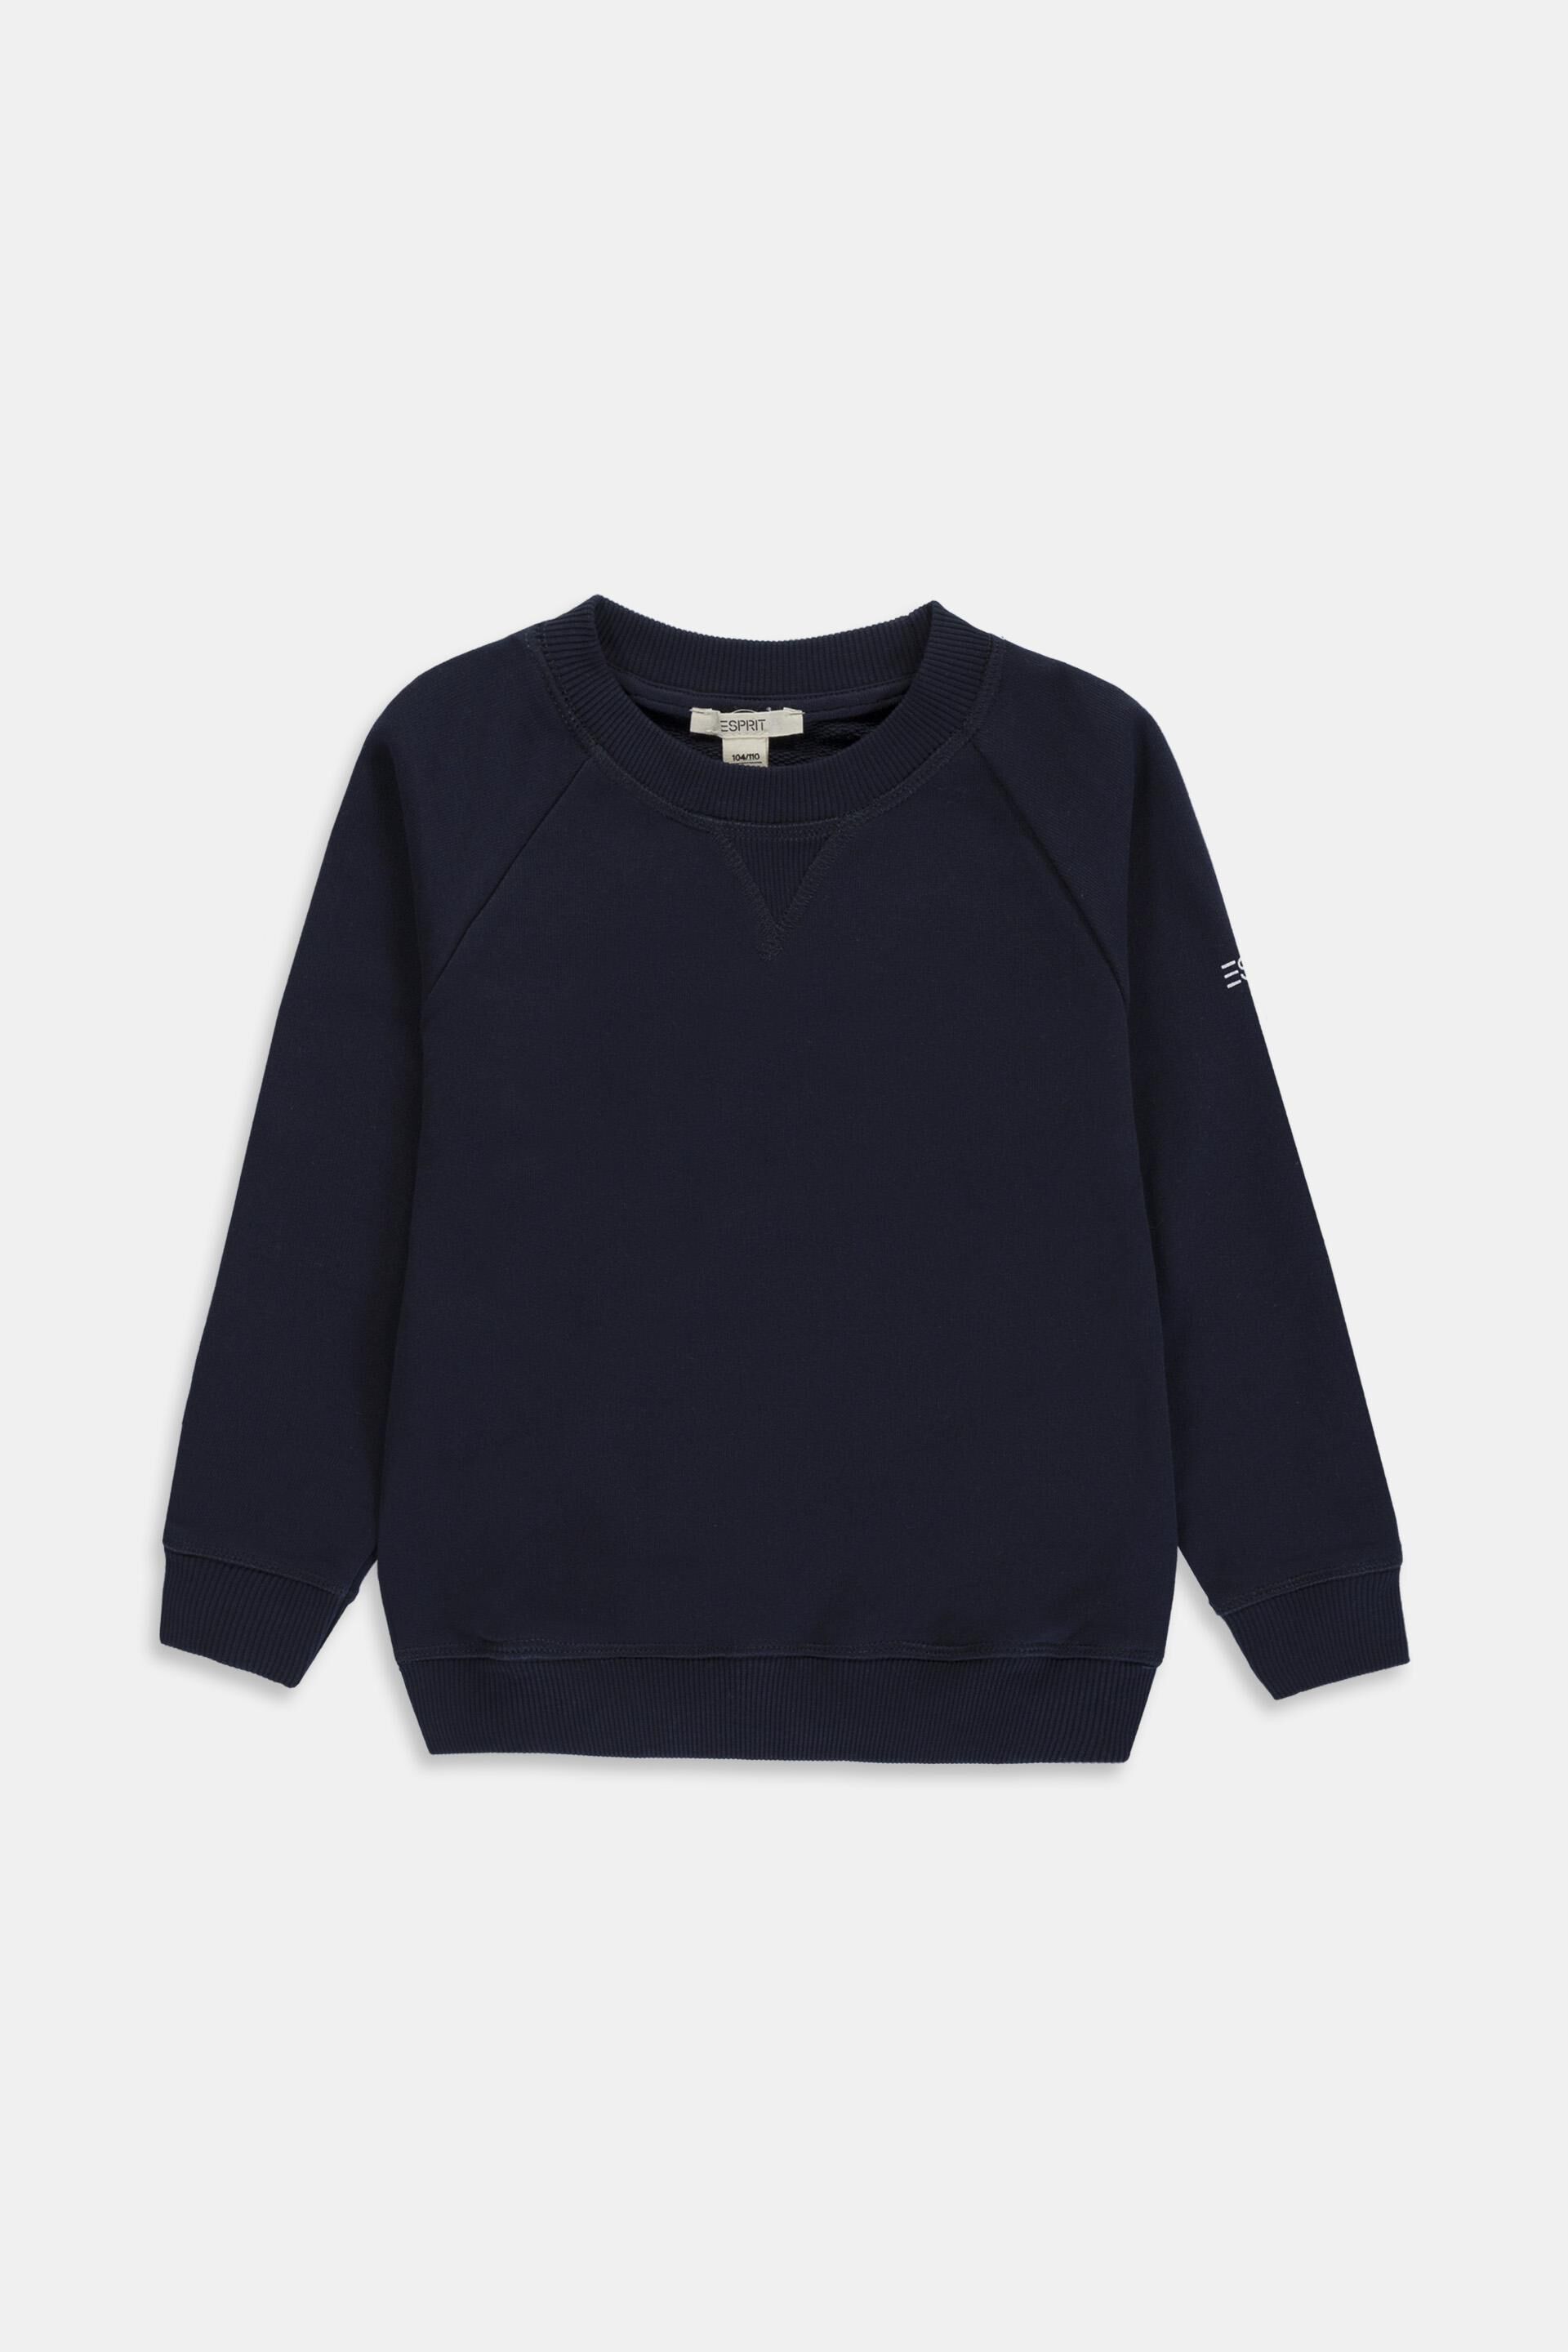 Esprit with logo Sweatshirt 100% of made cotton